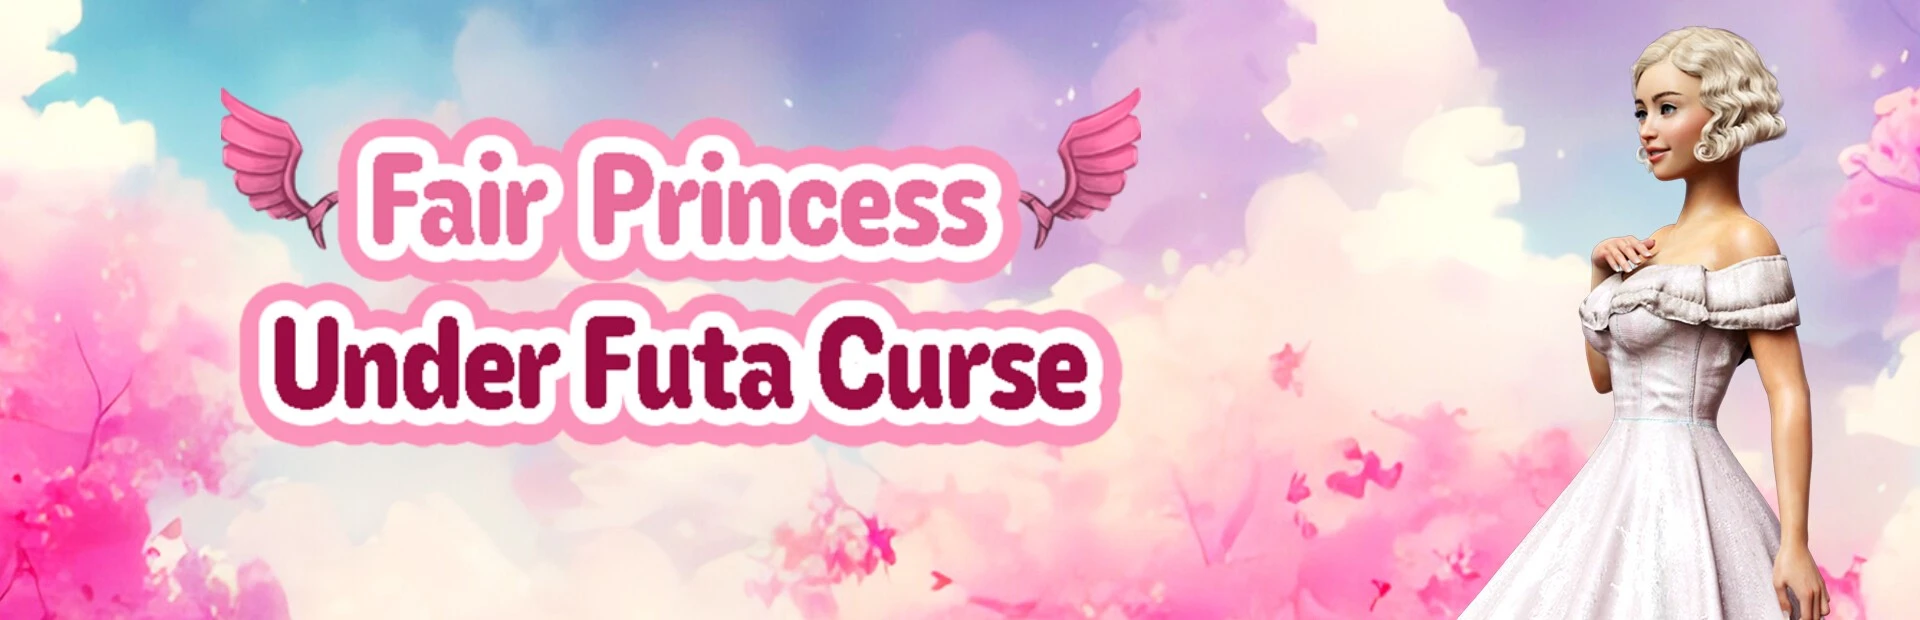 Fair Princess Under Futa Curse main image